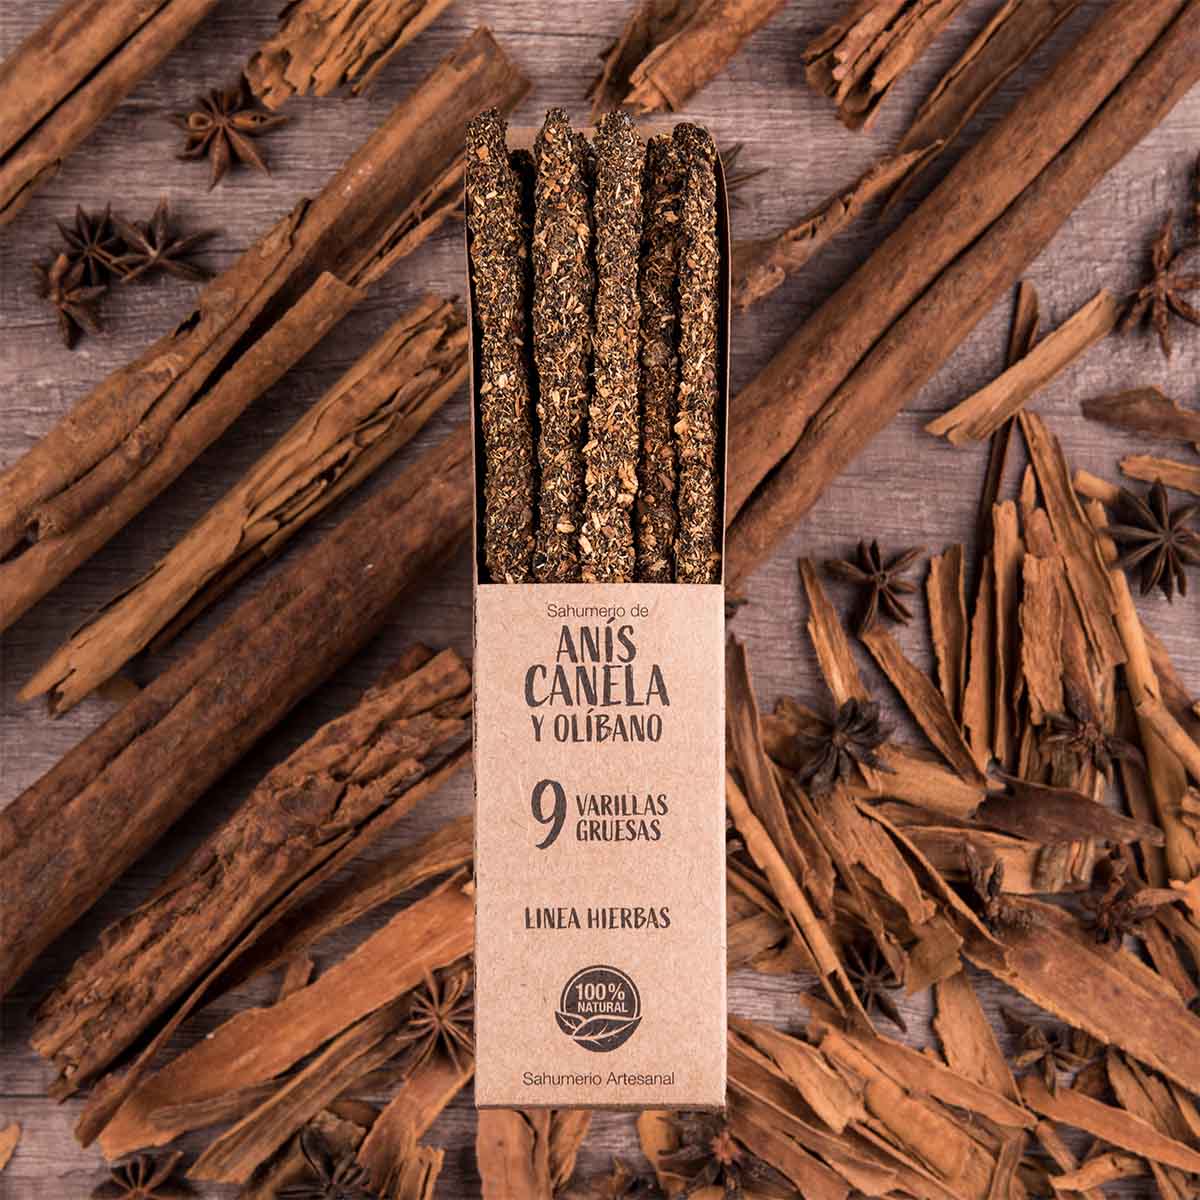 Anise and Cinnamon Botanical Natural Incense